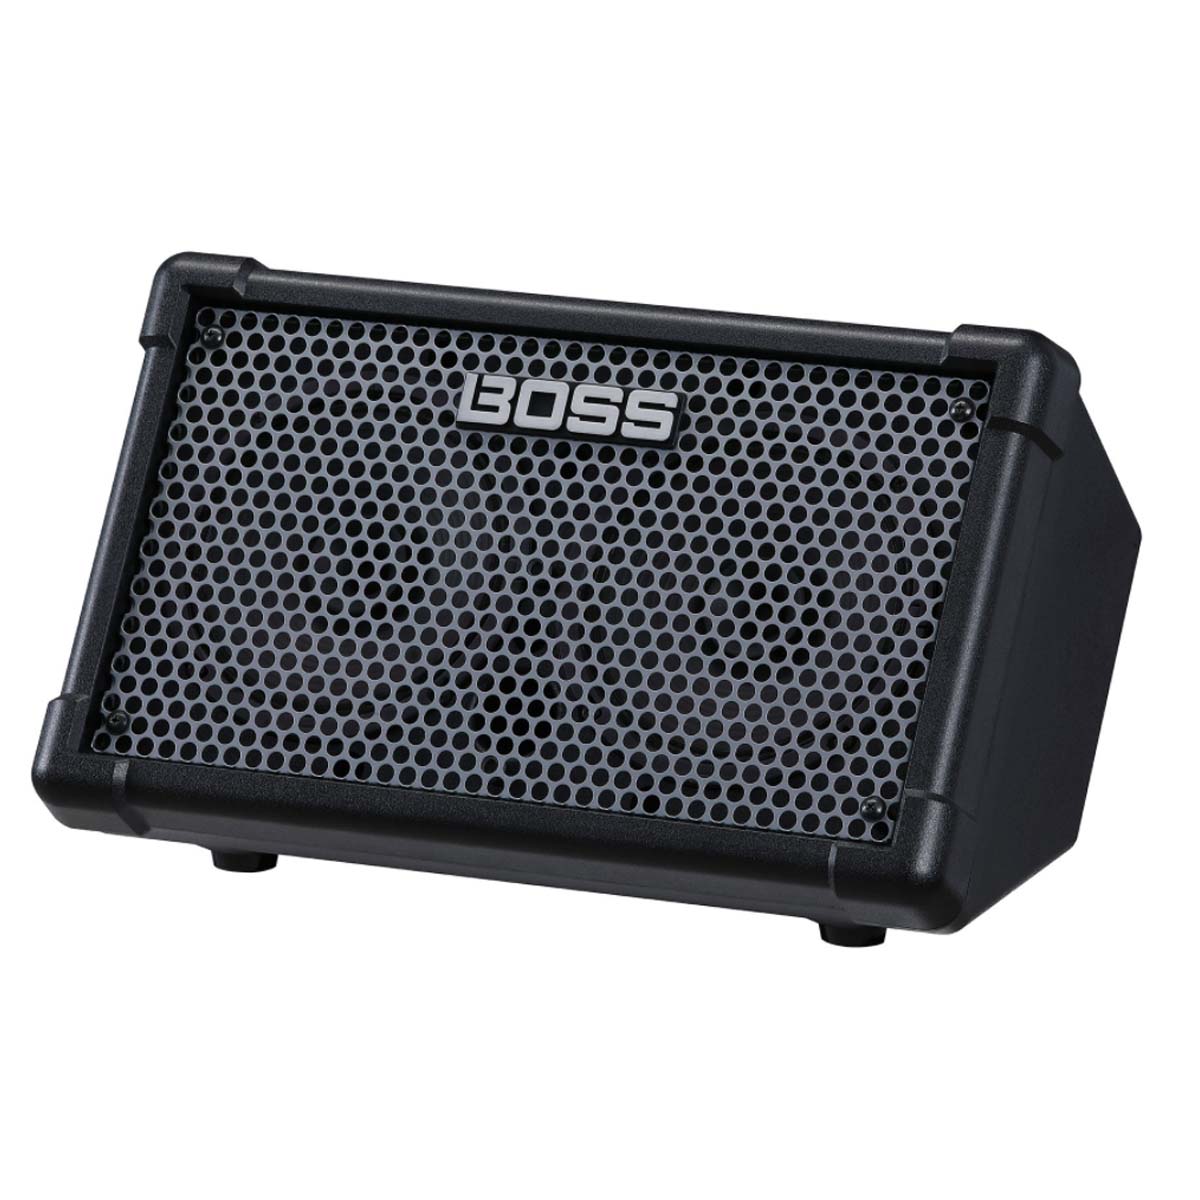 Boss Cube Street II Guitar Amplifier Battery Powered Stereo Amp Black